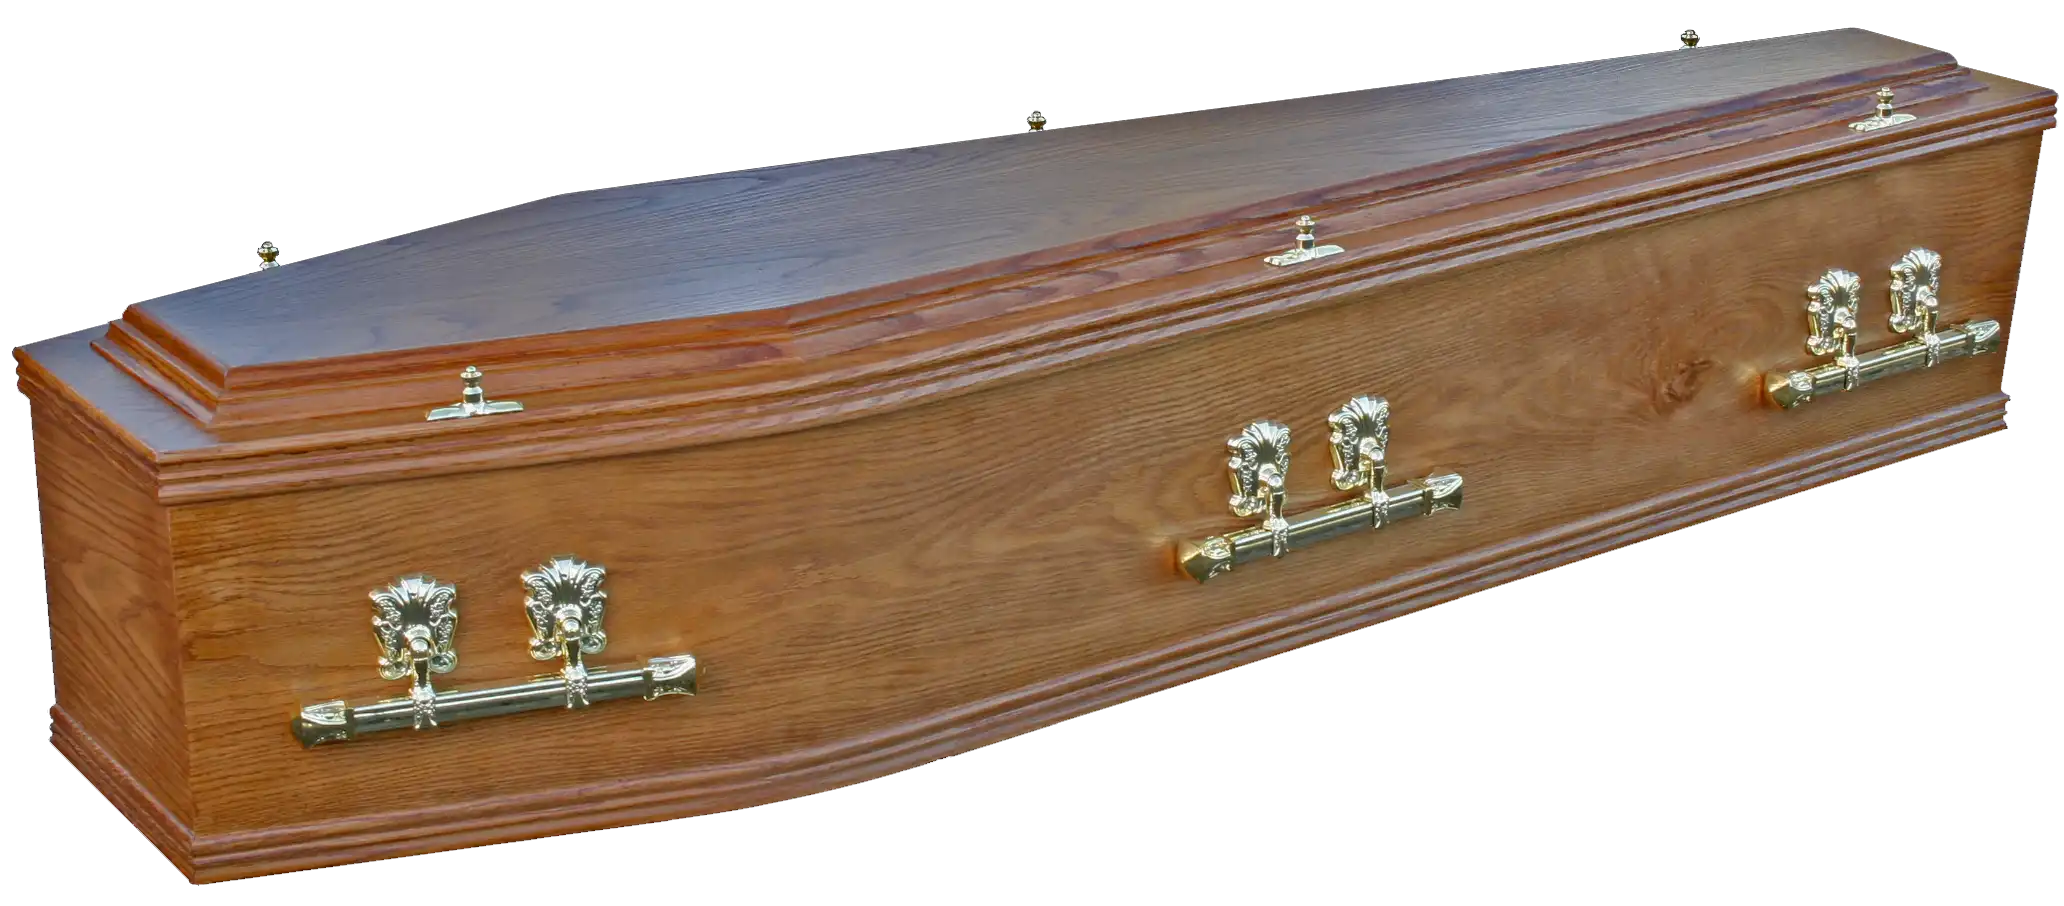 coffin image